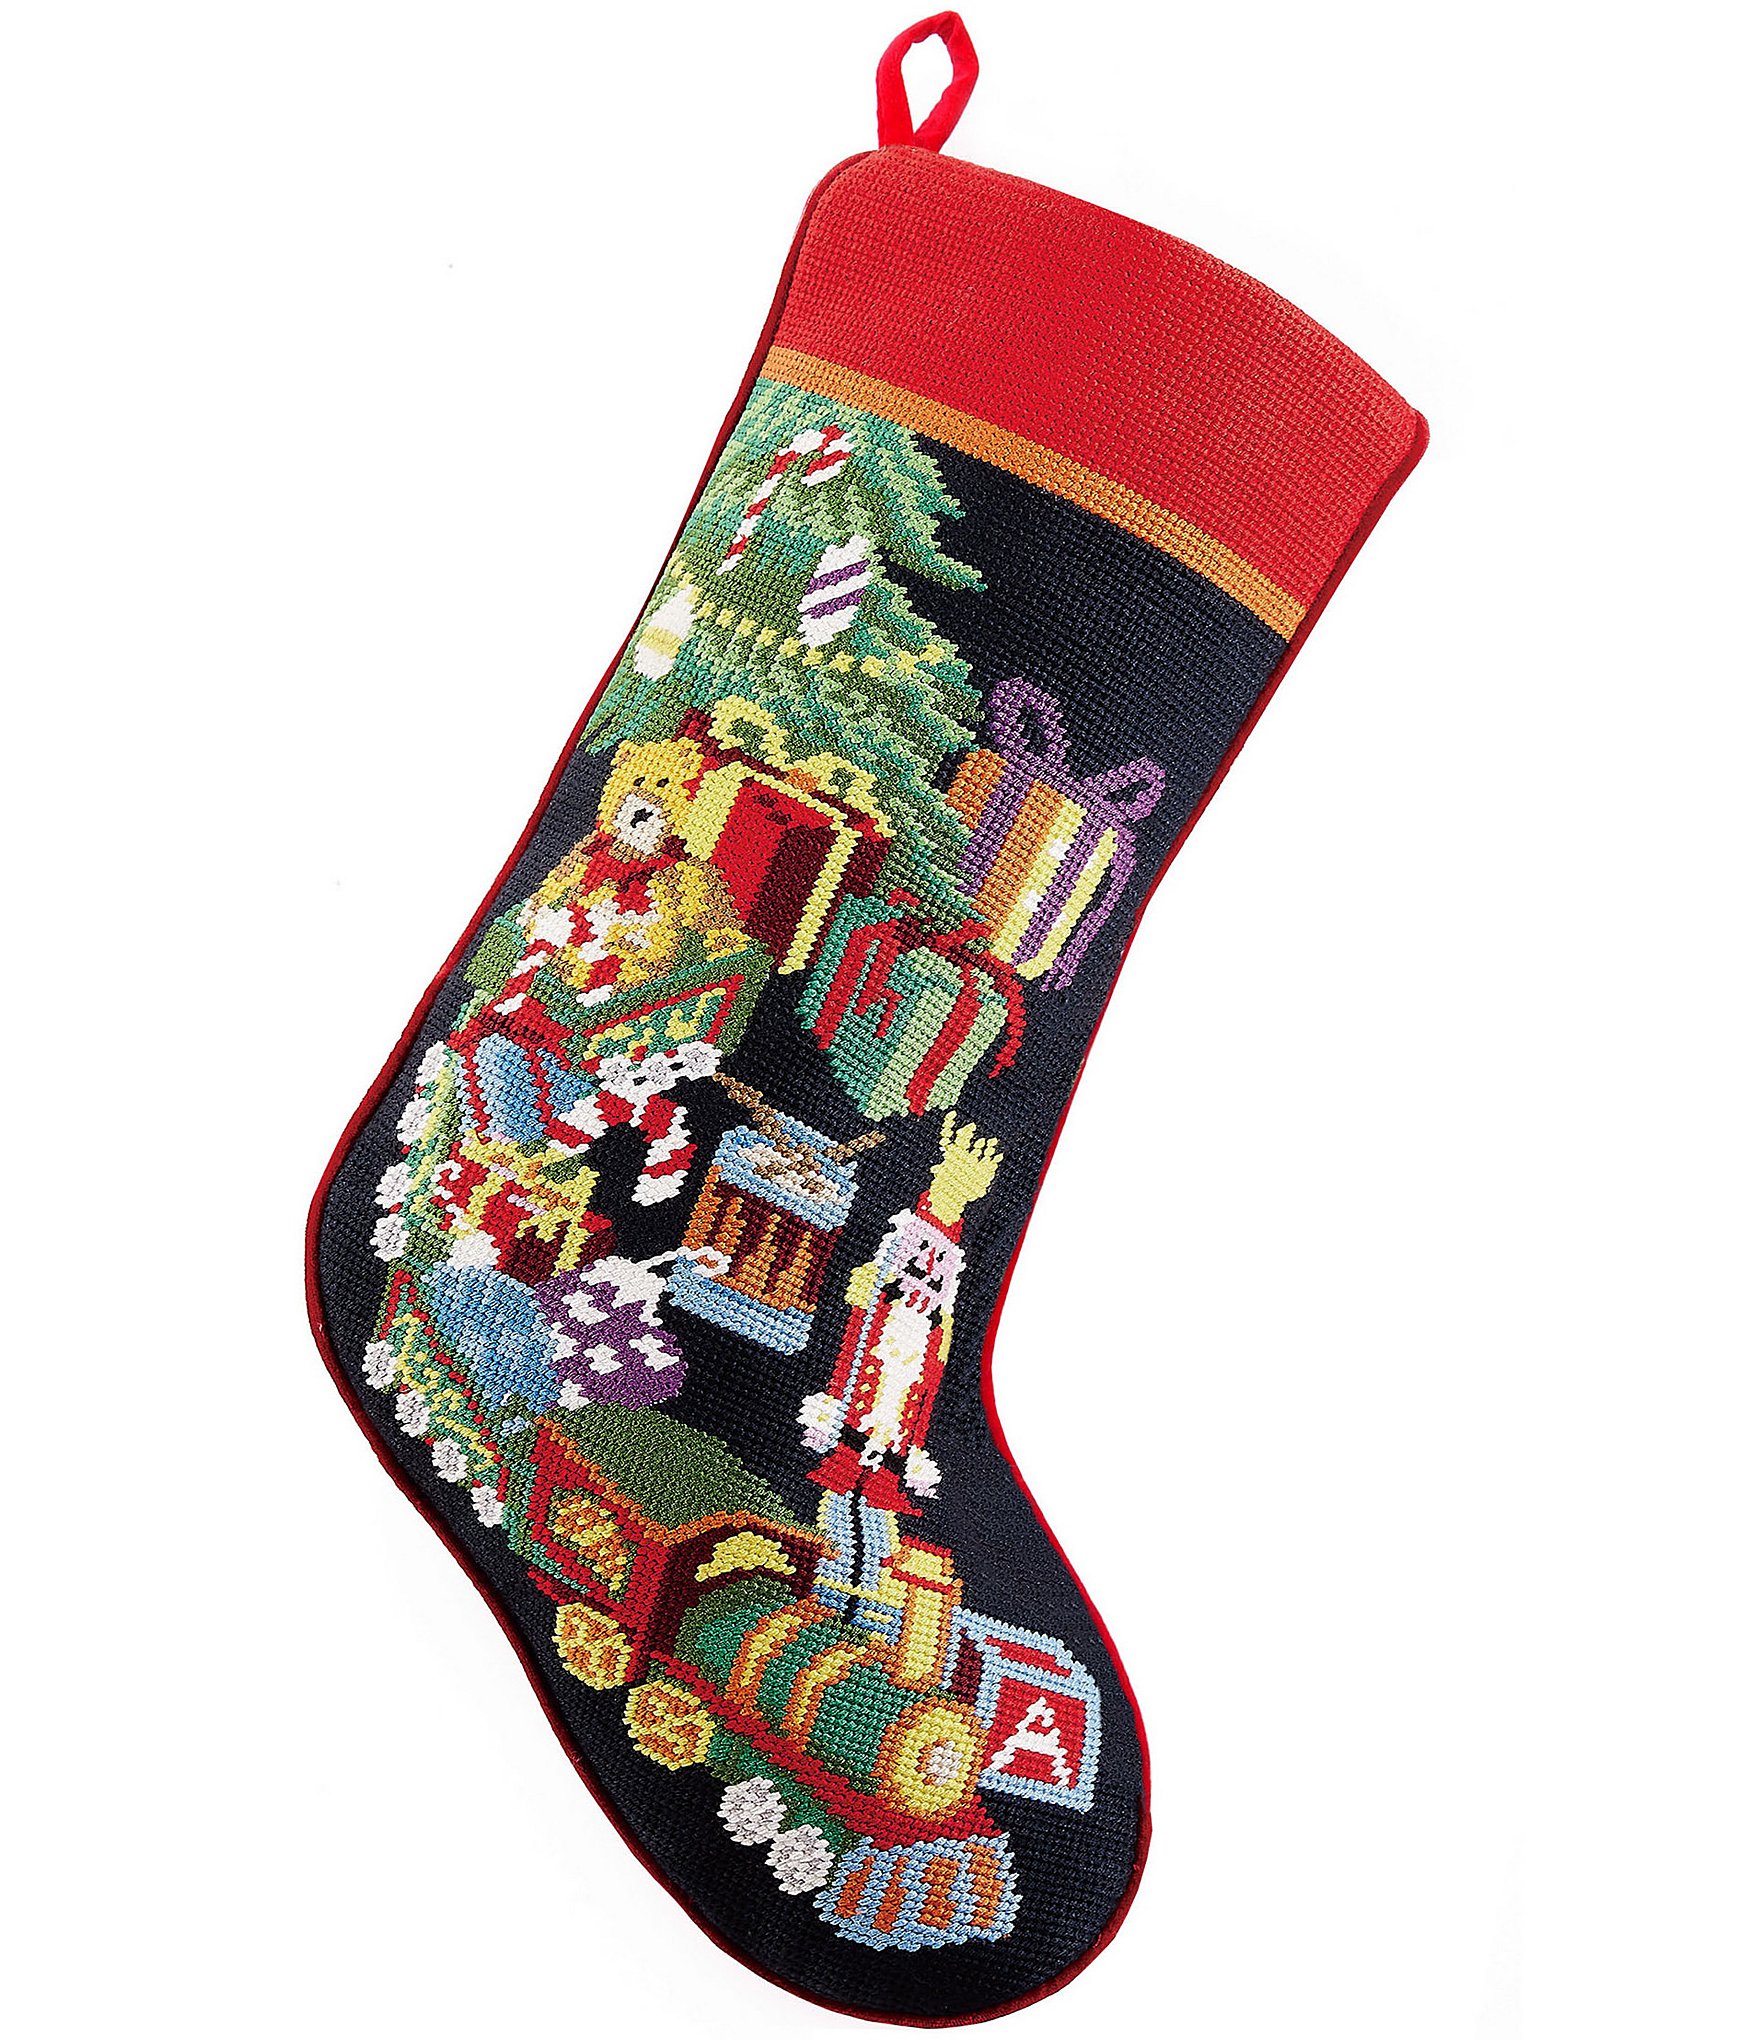 Peking Handicraft 31SJM9531NMC 11 x 18 in. Christmas Tree Embroidered Needlepoint Stocking, Red & Green